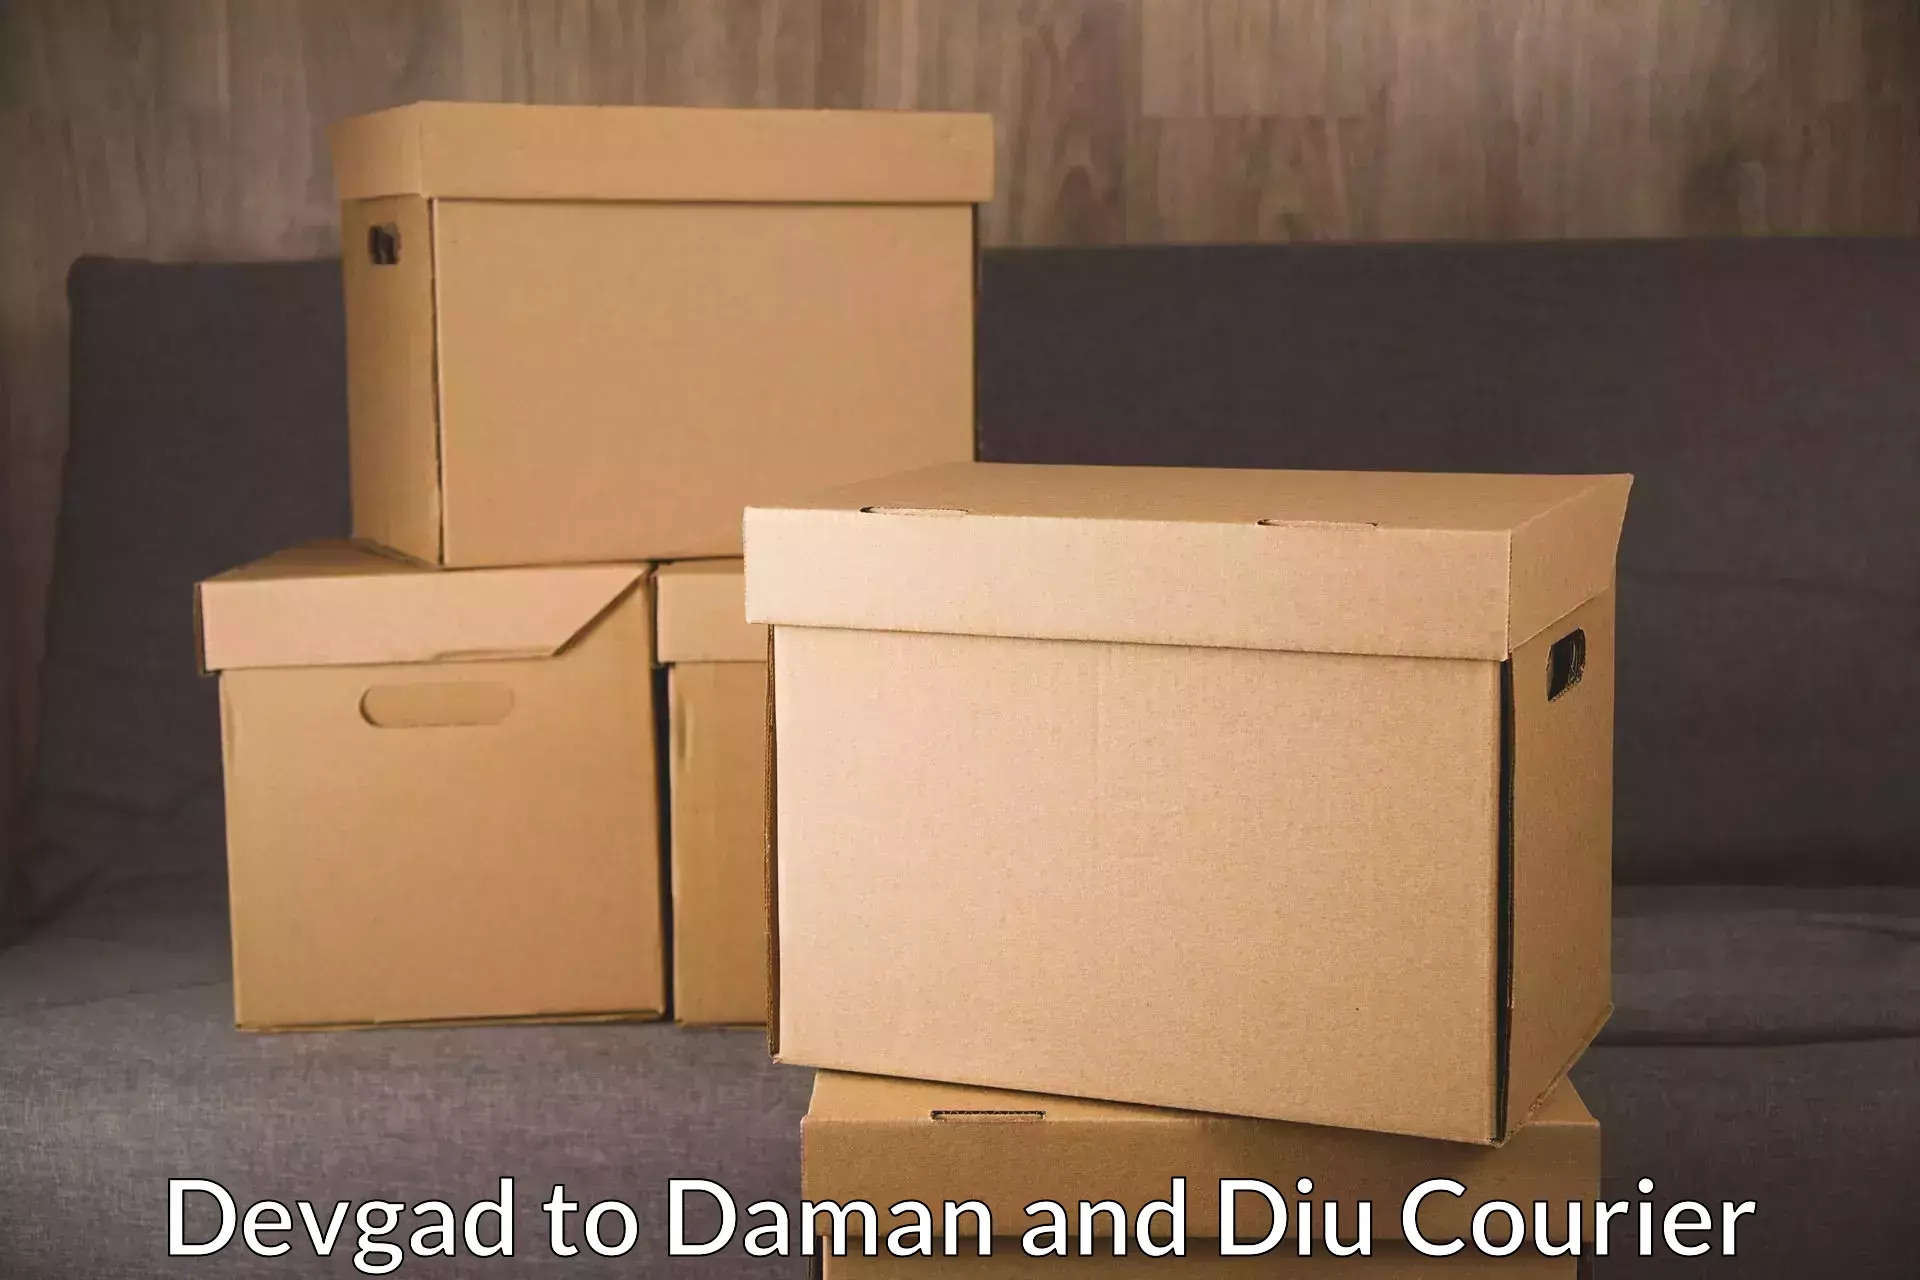 Courier service comparison Devgad to Daman and Diu